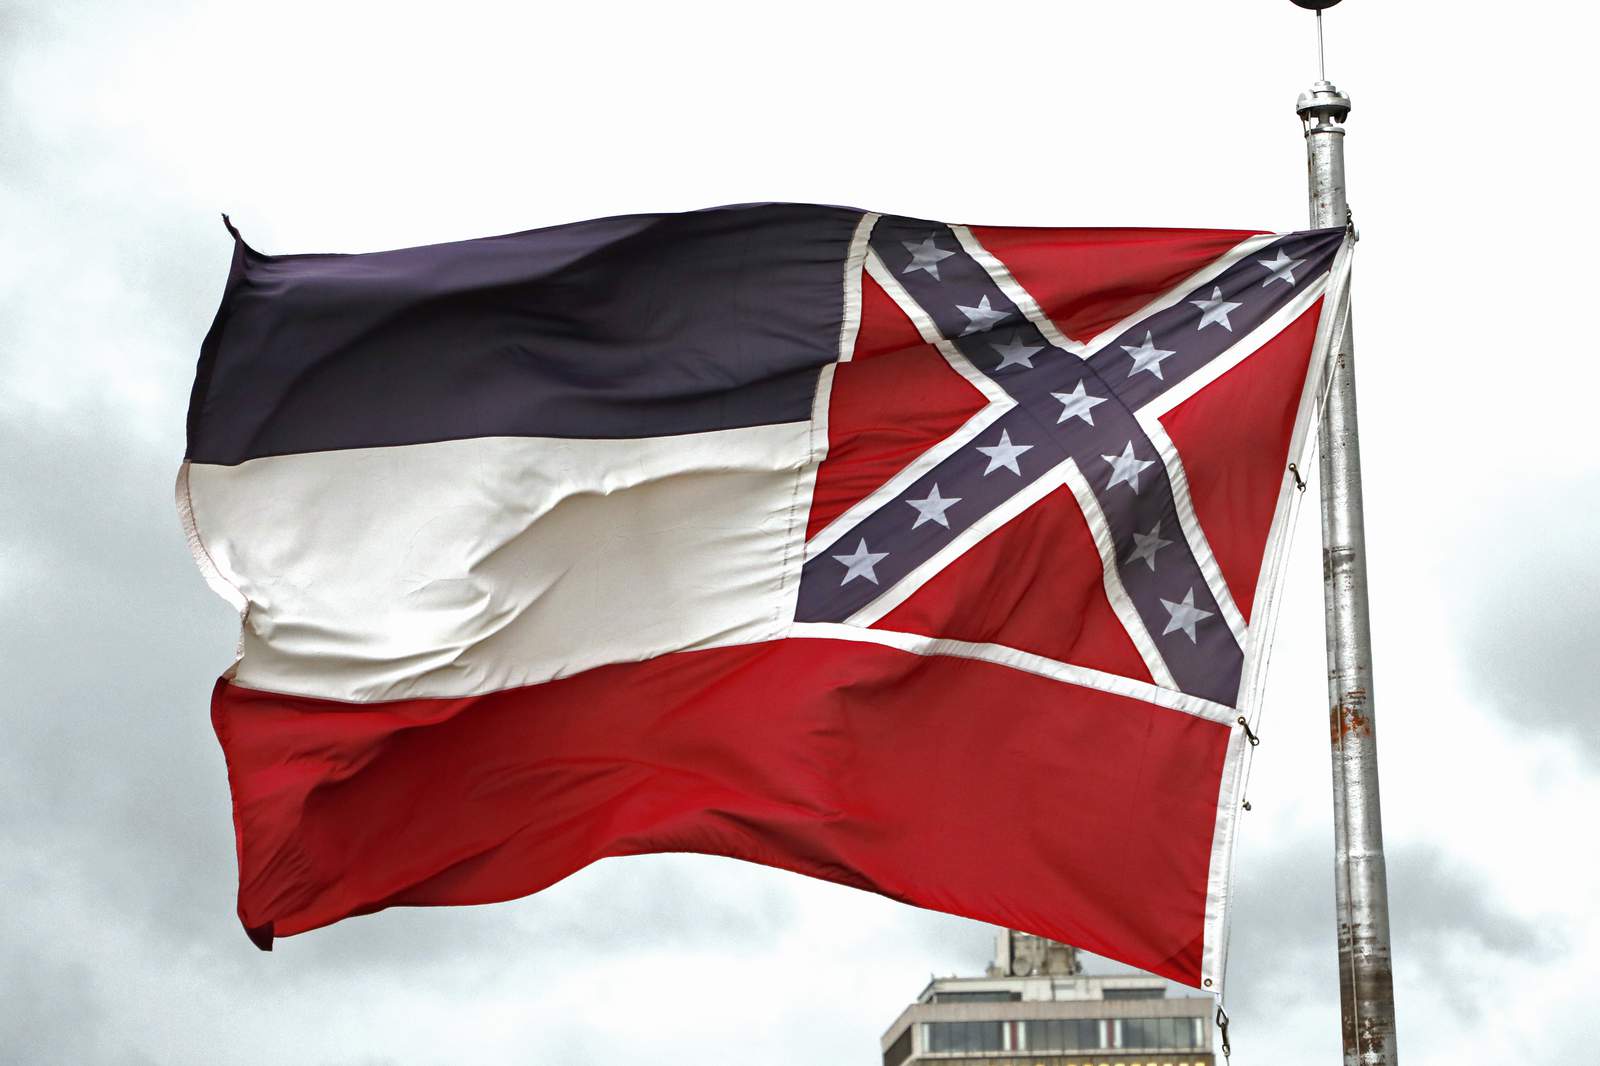 Mississippi retiring its rebel-themed former flag to museum